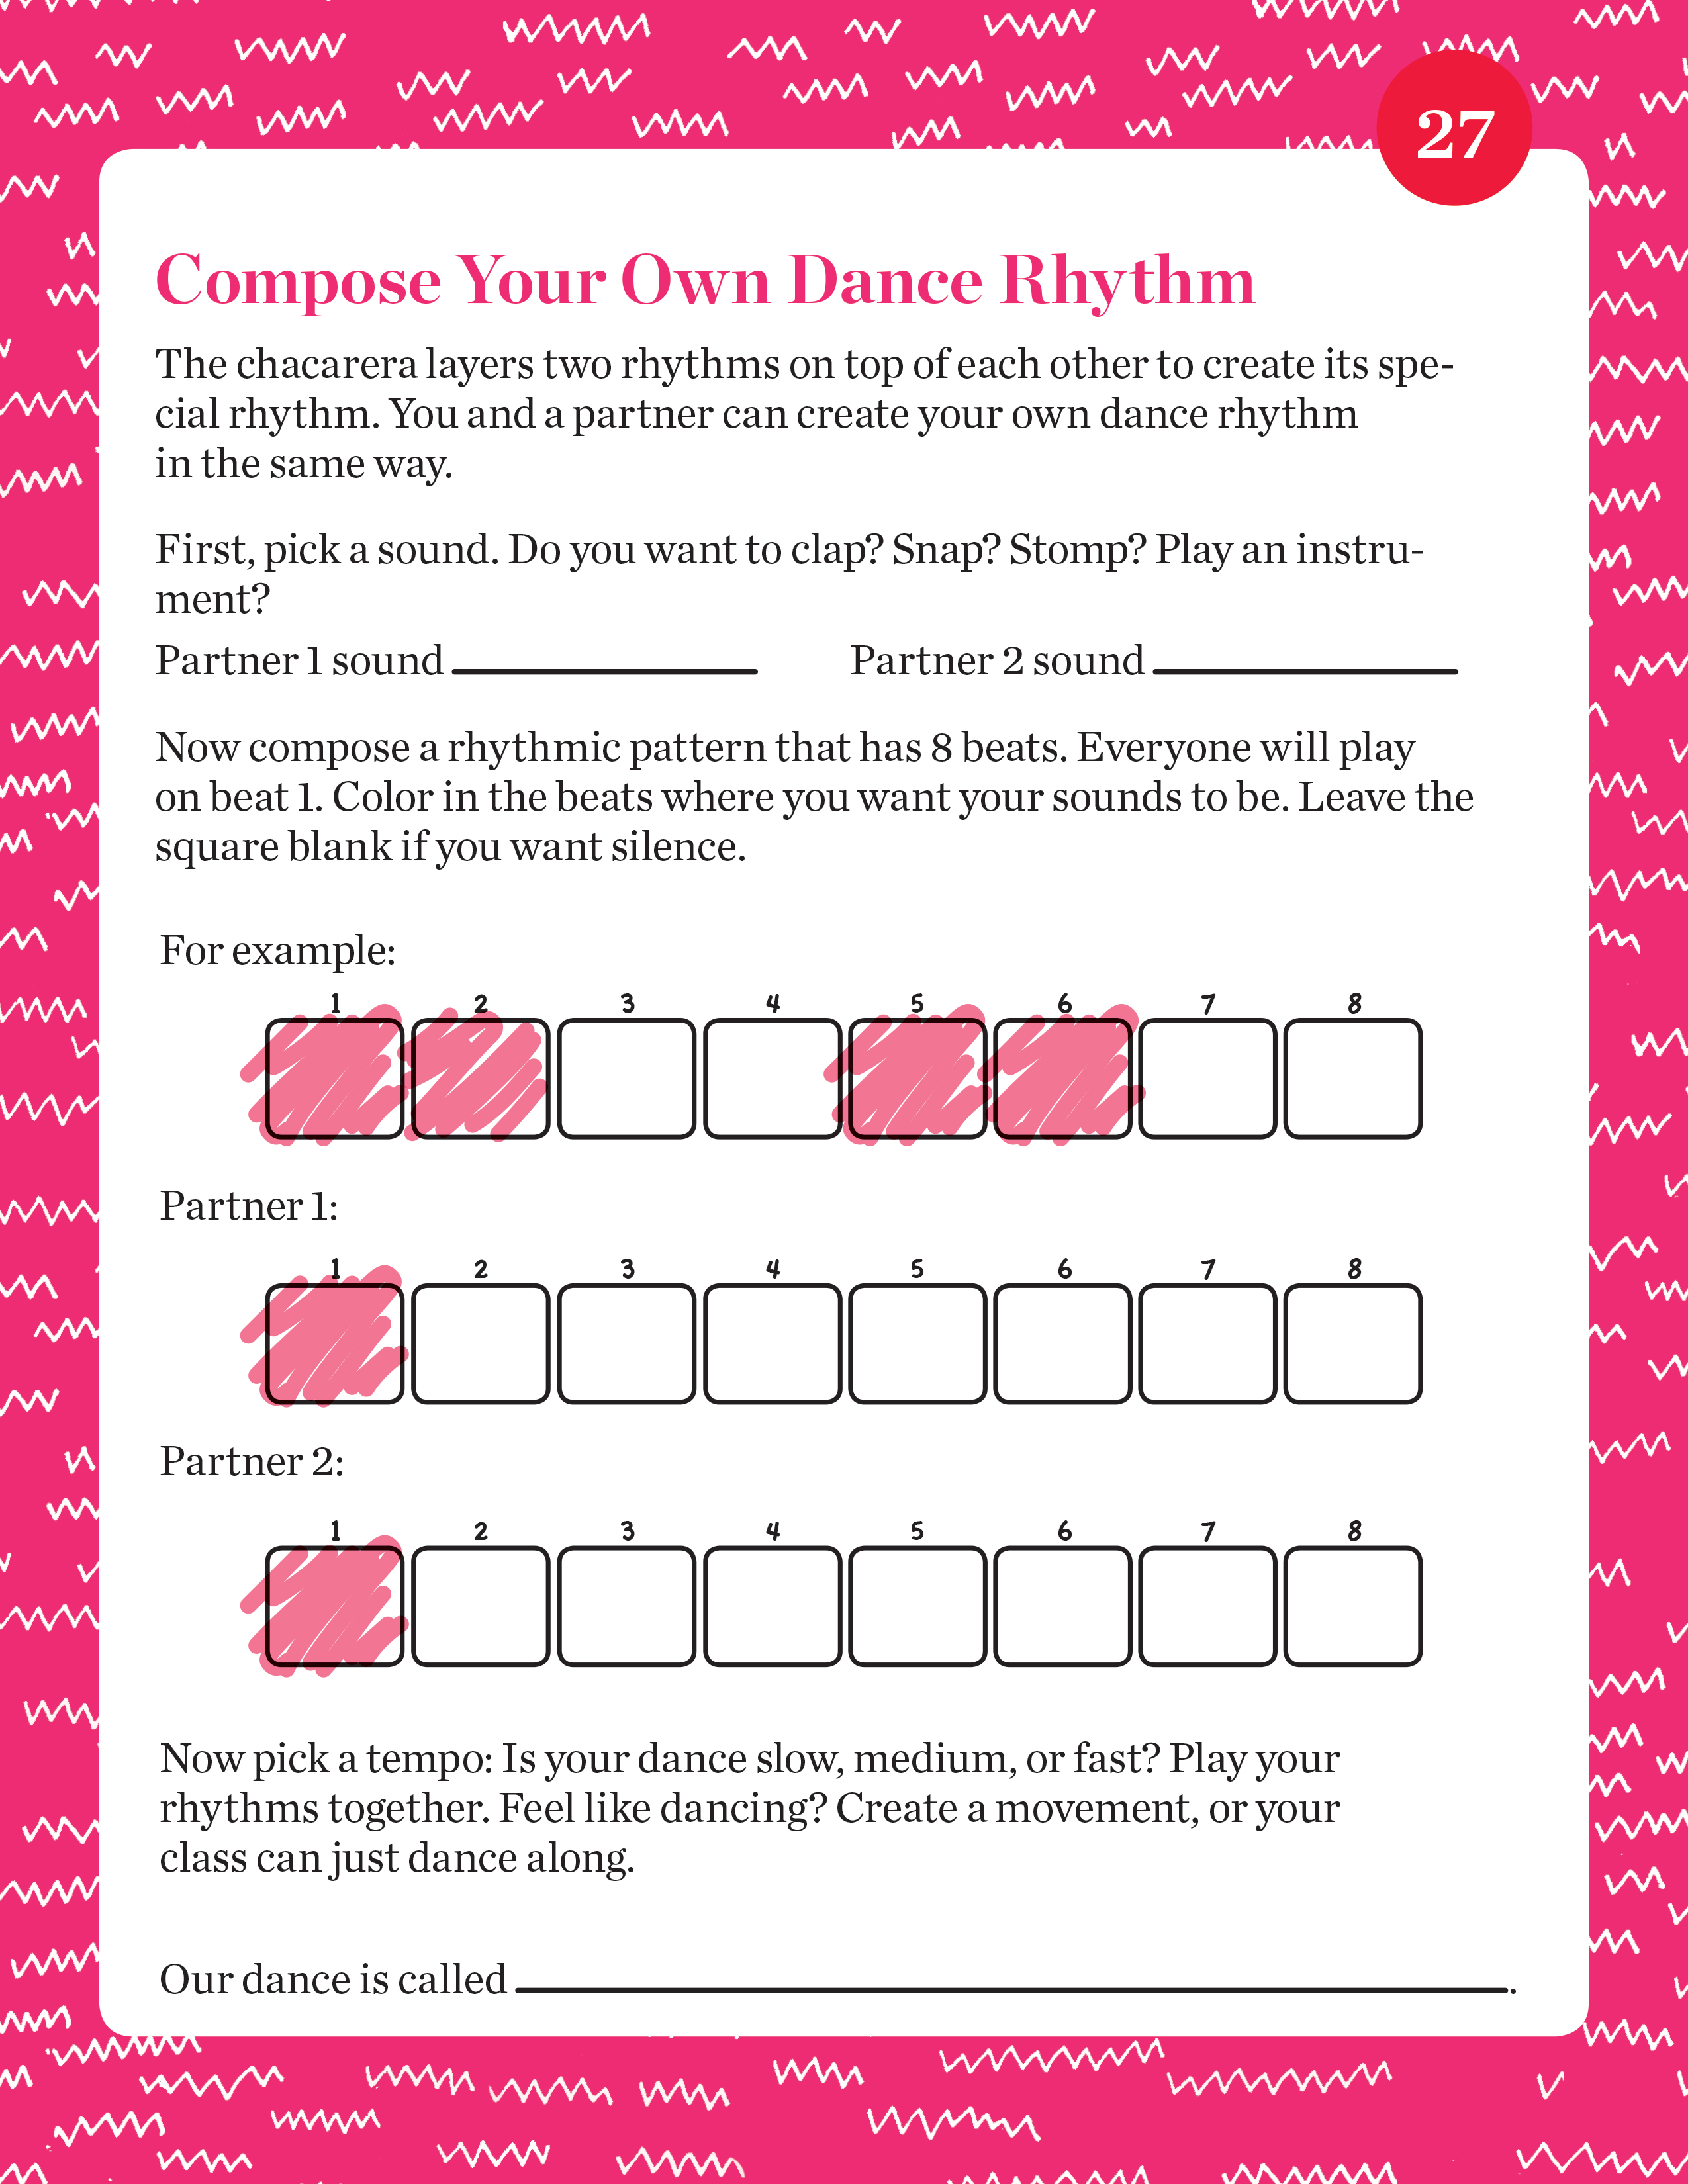 Compose Your Own Dance Rhythm